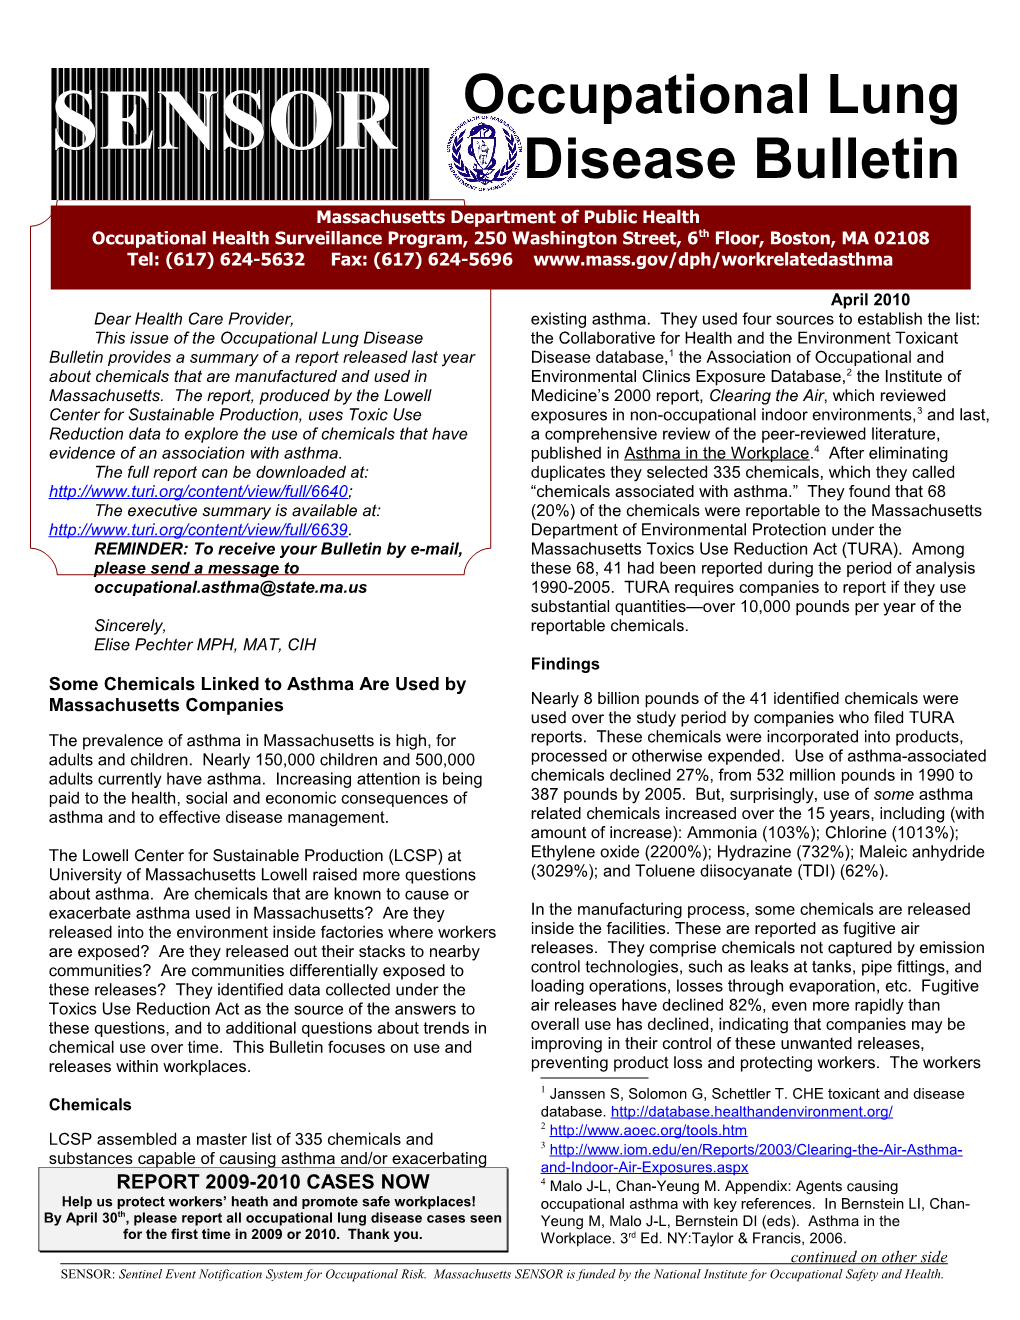 Occupational Lung Disease Bulletin